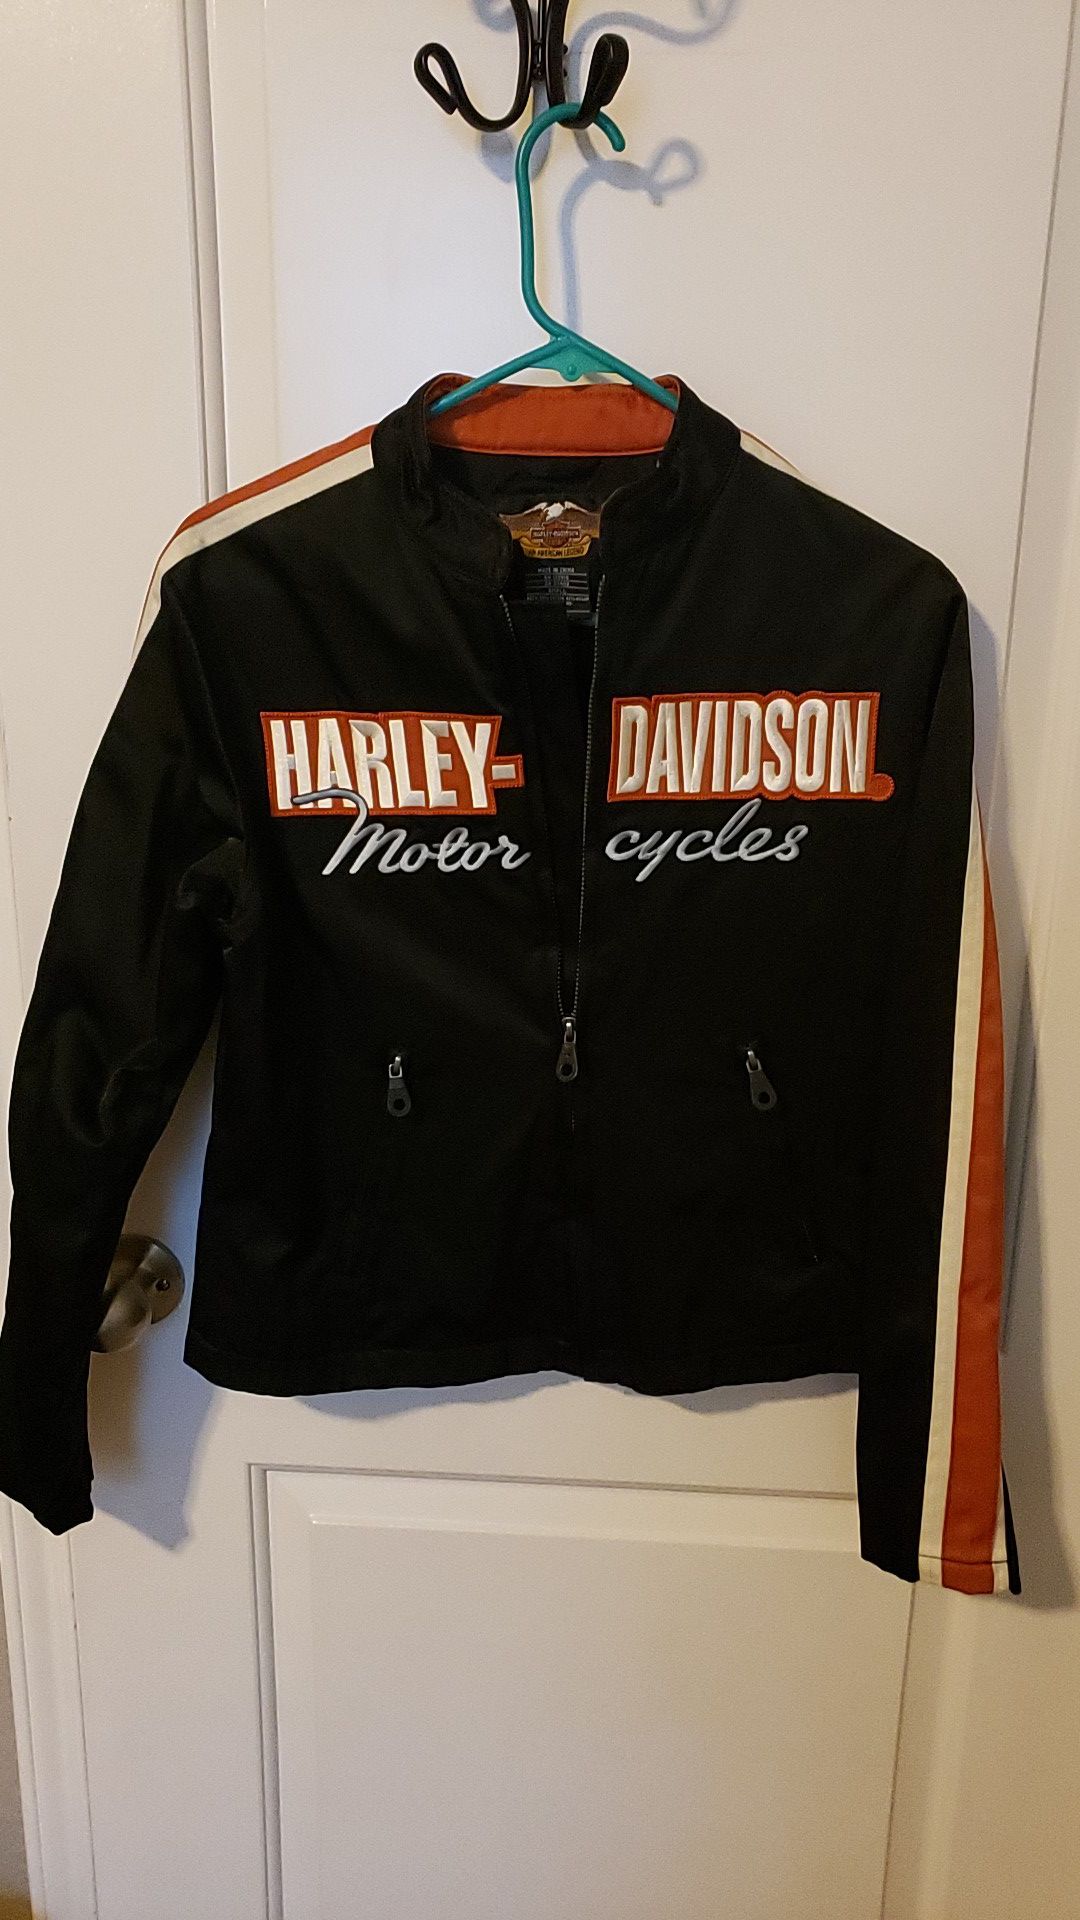 Women's Harley jacket size small